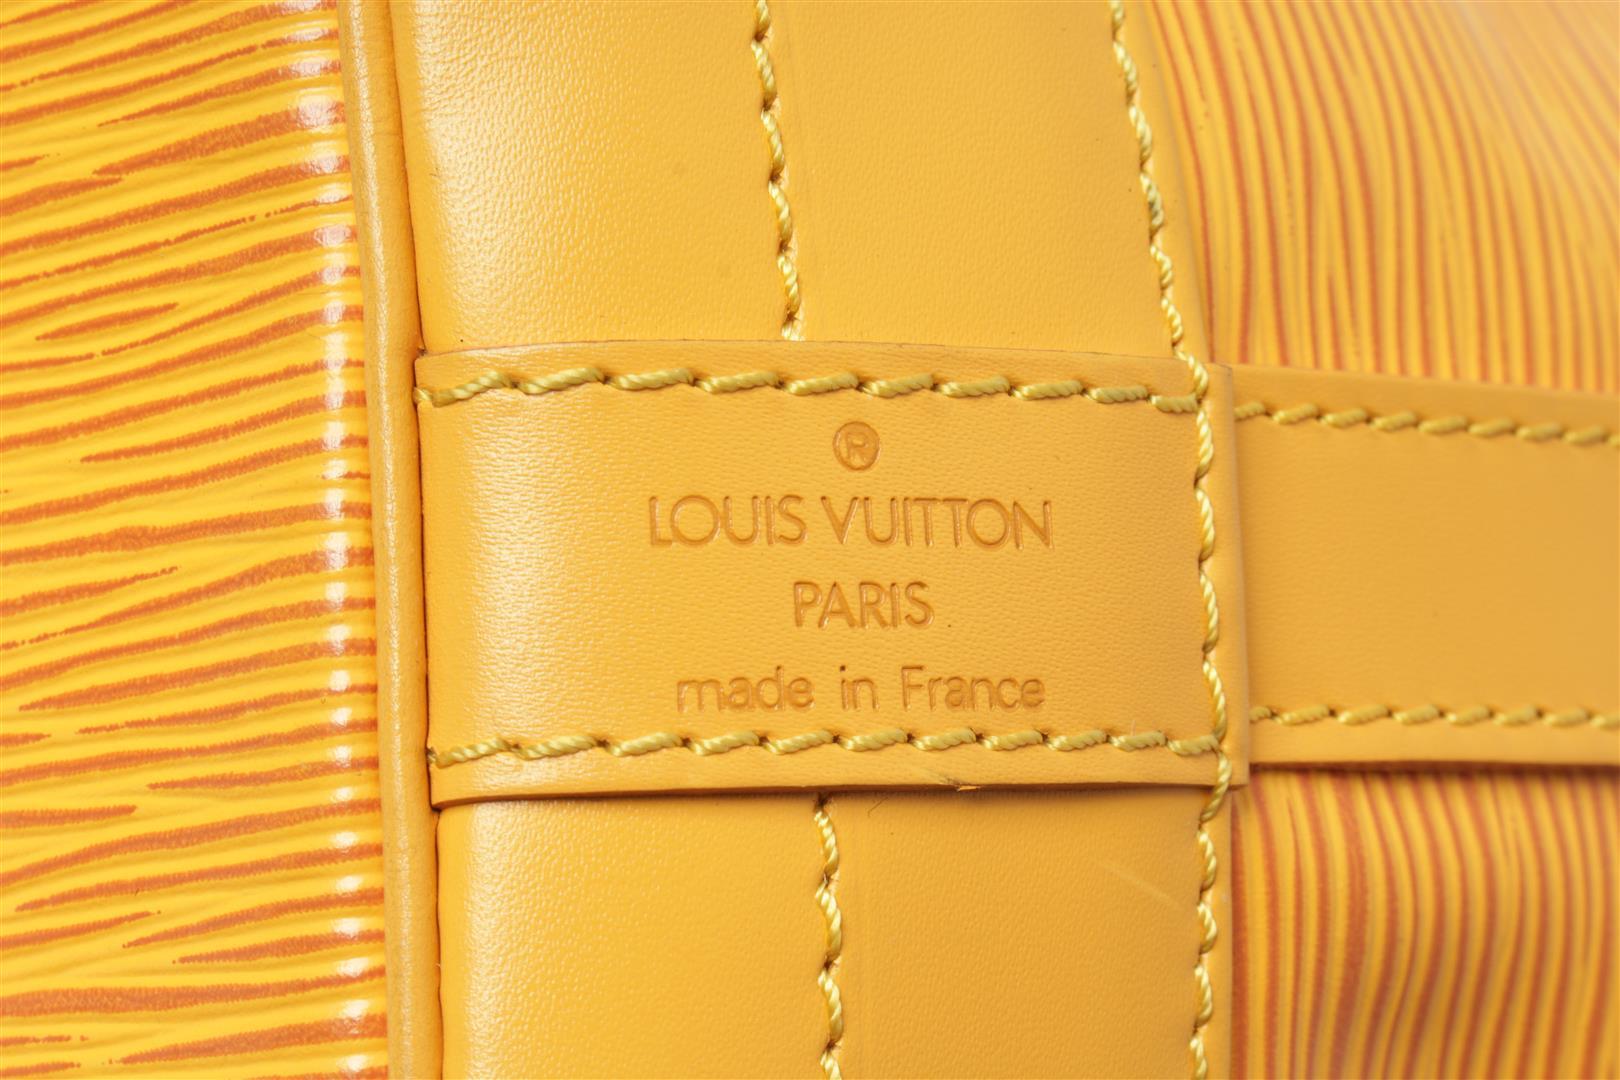 Louis Vuitton Yellow Epi Leather Noe GM Shoulder Bag